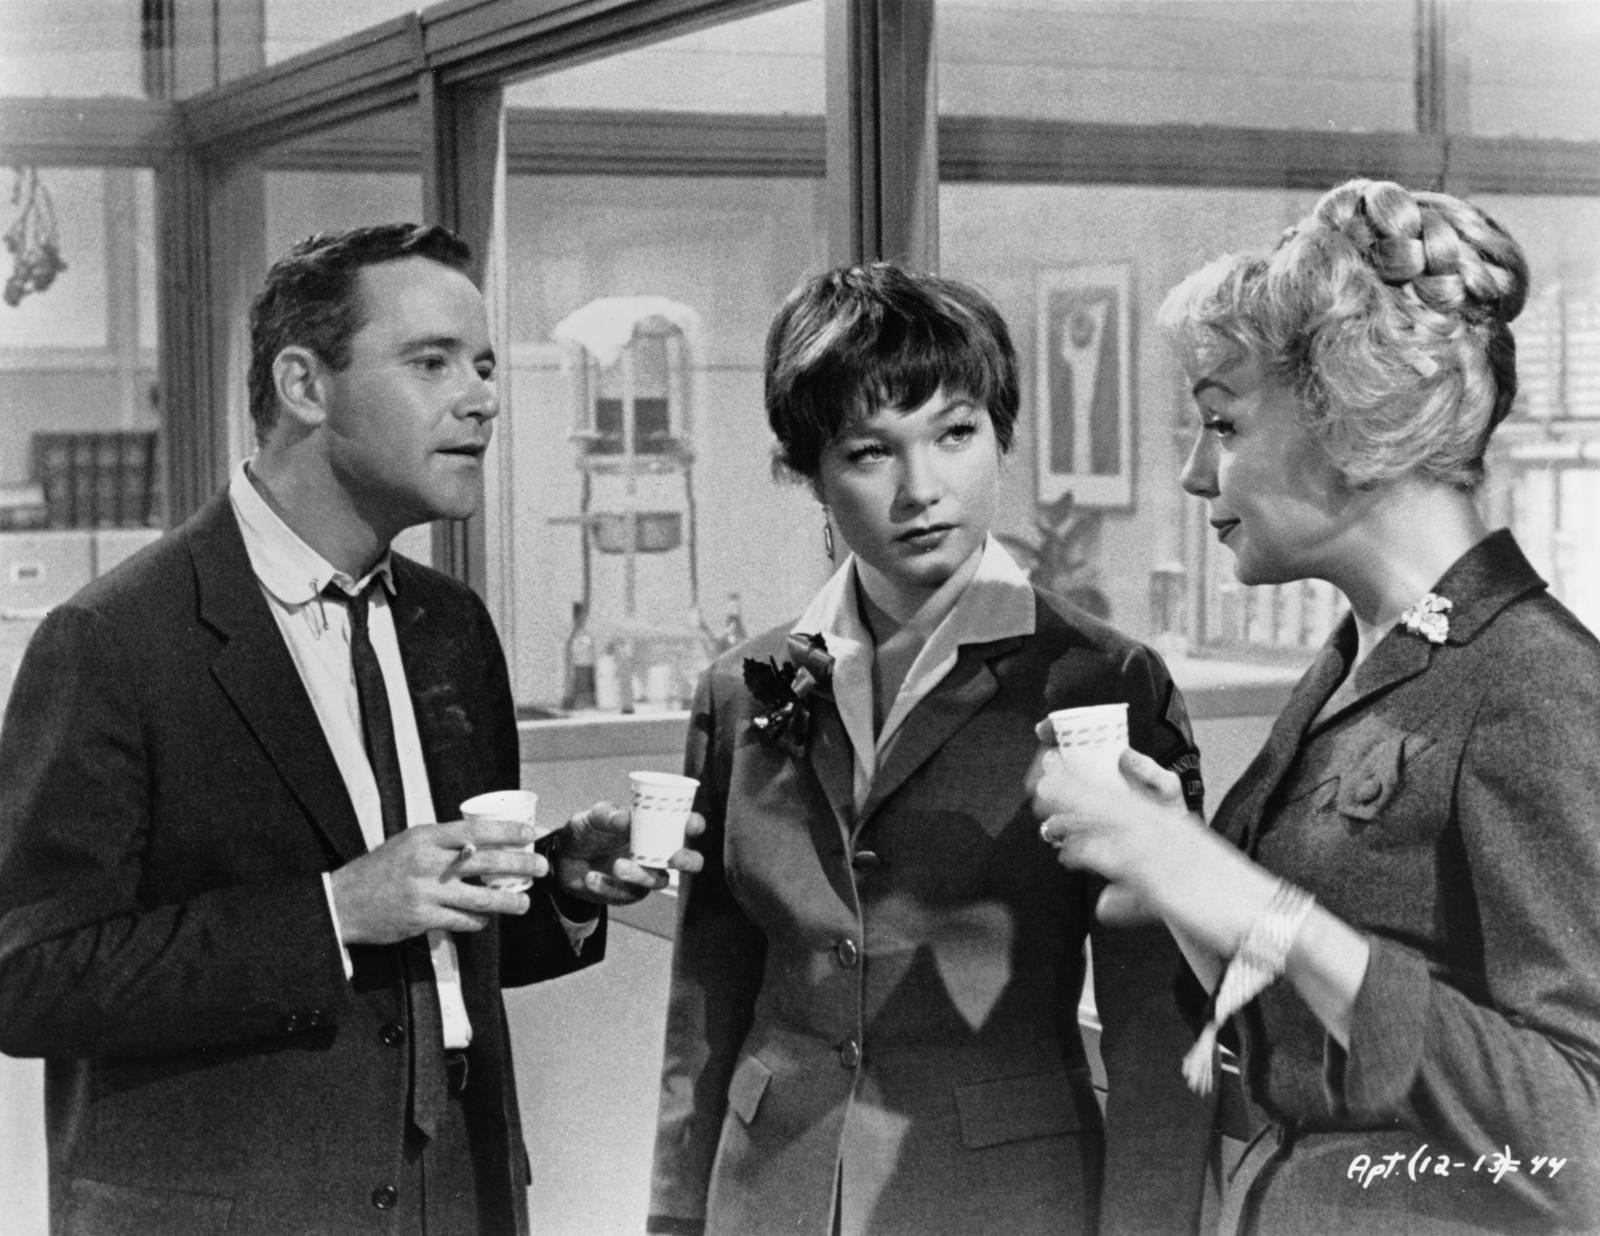 Film Byt (1960)